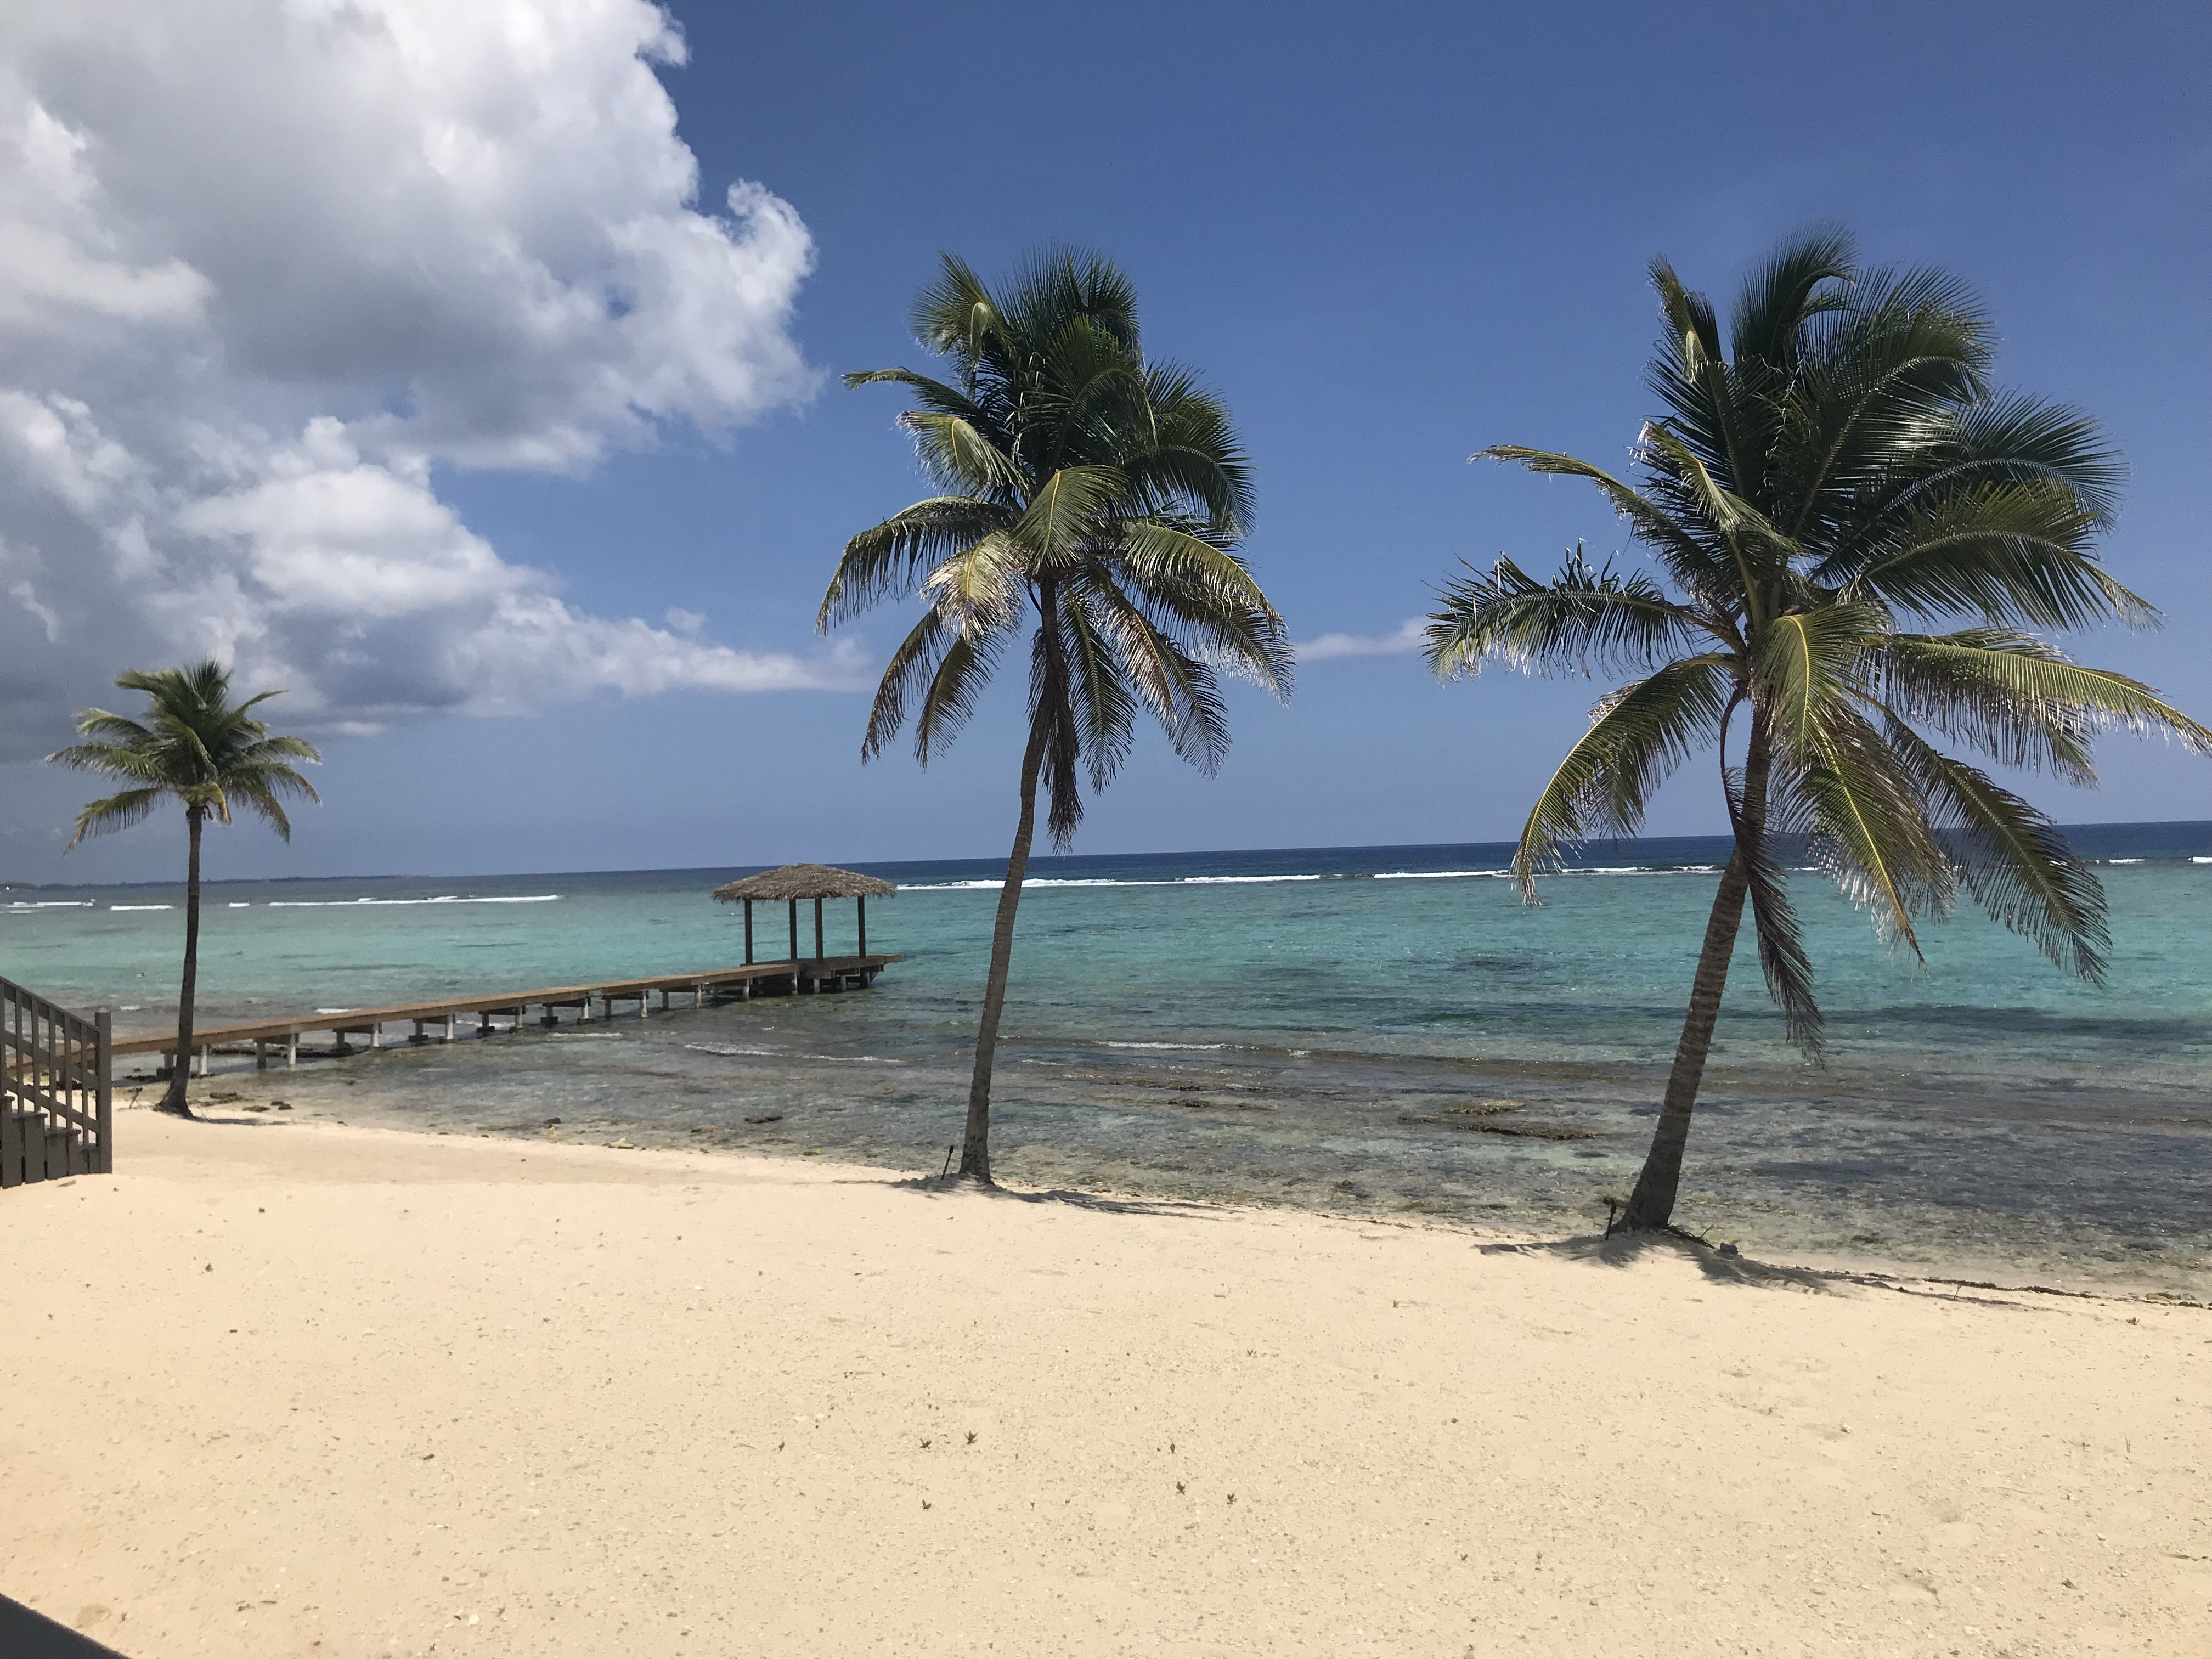 THE WANDERLUST CARIBBEAN GUIDE: The Cayman Islands